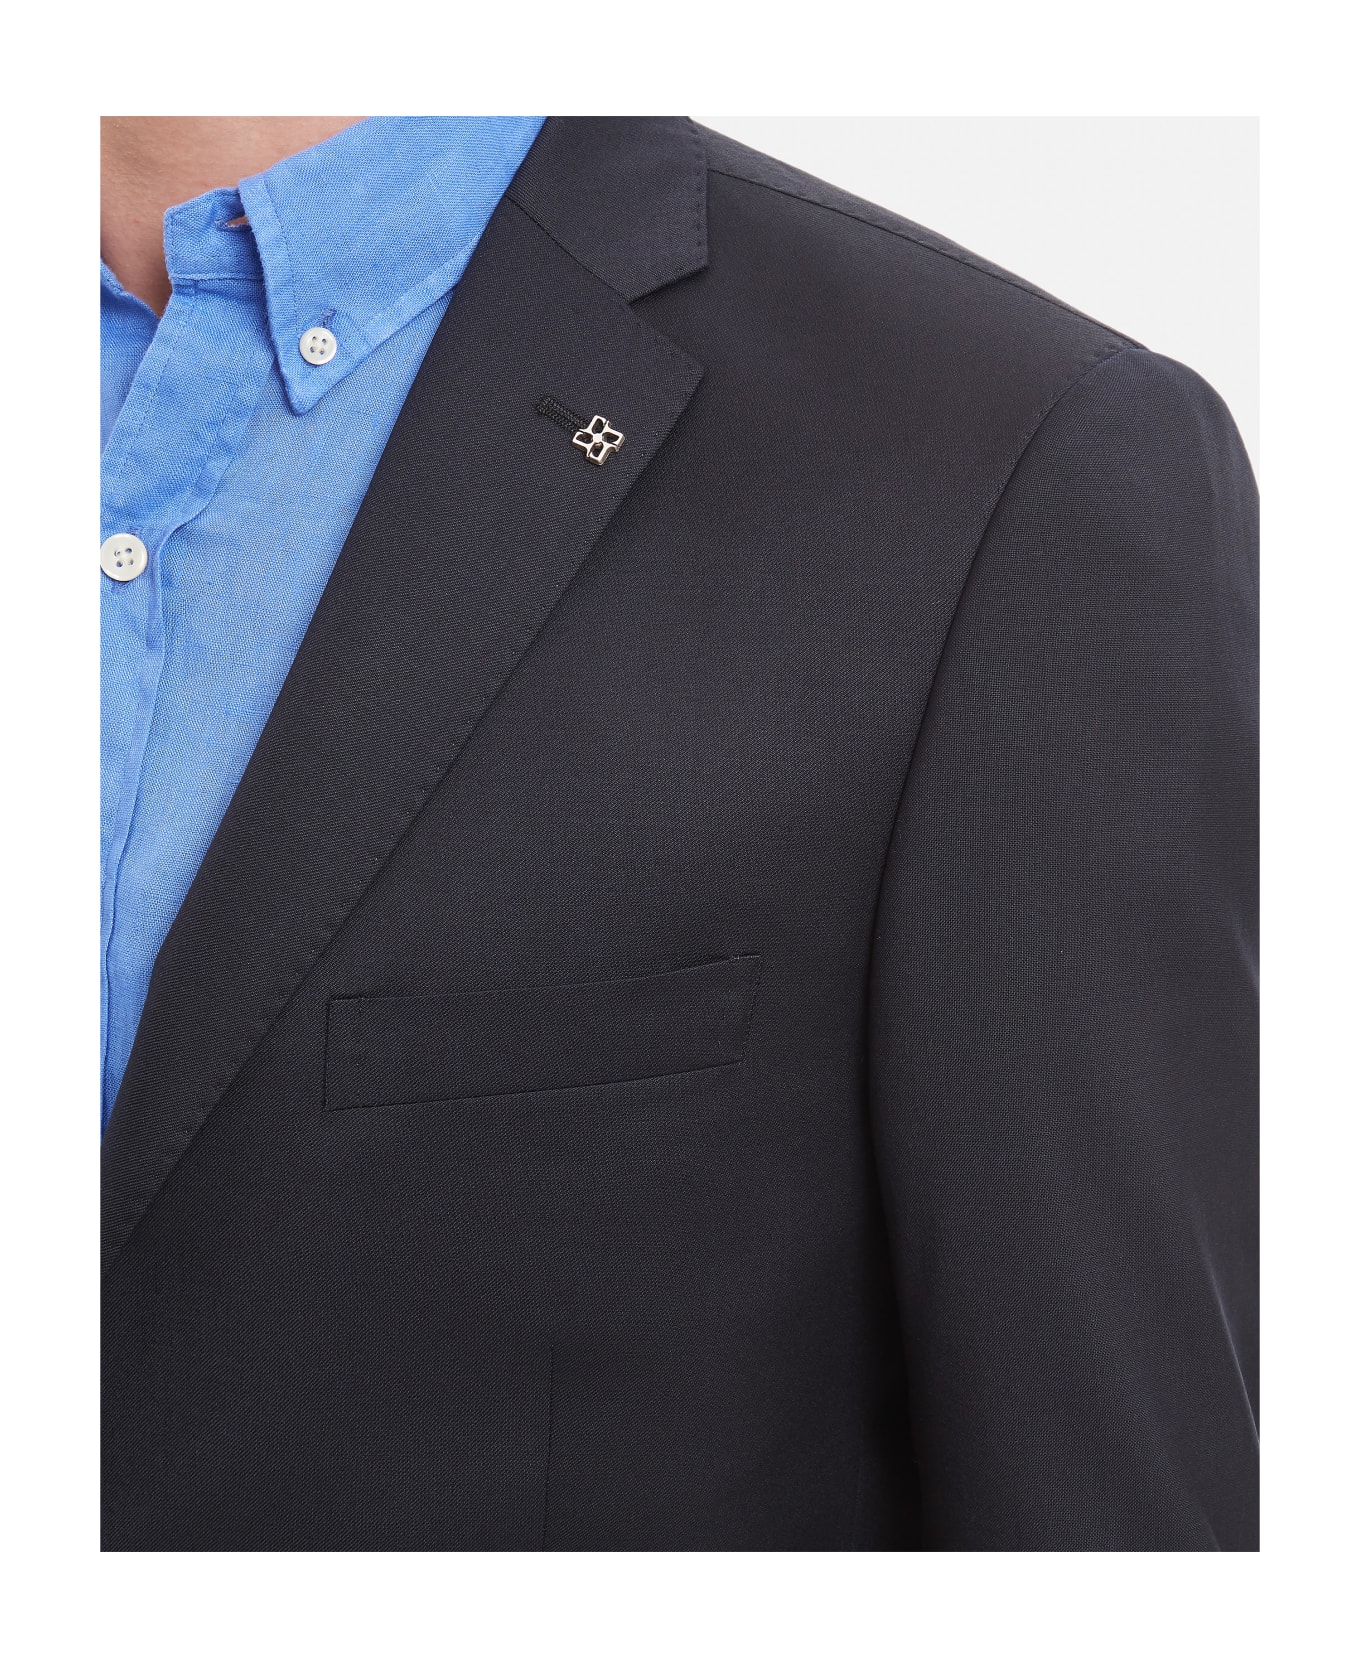 Tagliatore Cotton Dress Suit - Blue